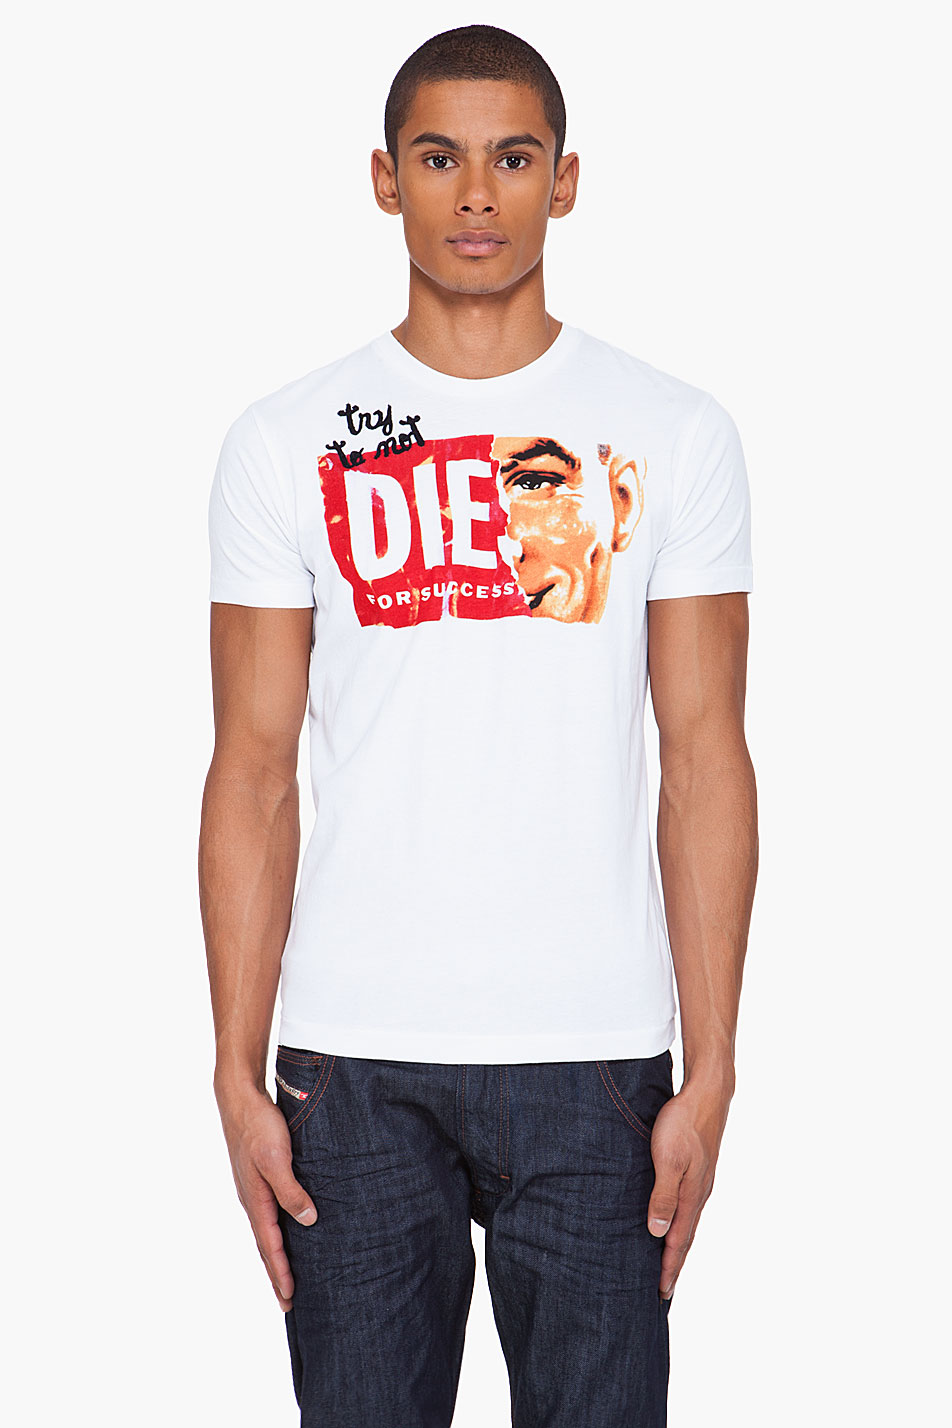 DIESEL Die For Success T-shirt in White for Men - Lyst